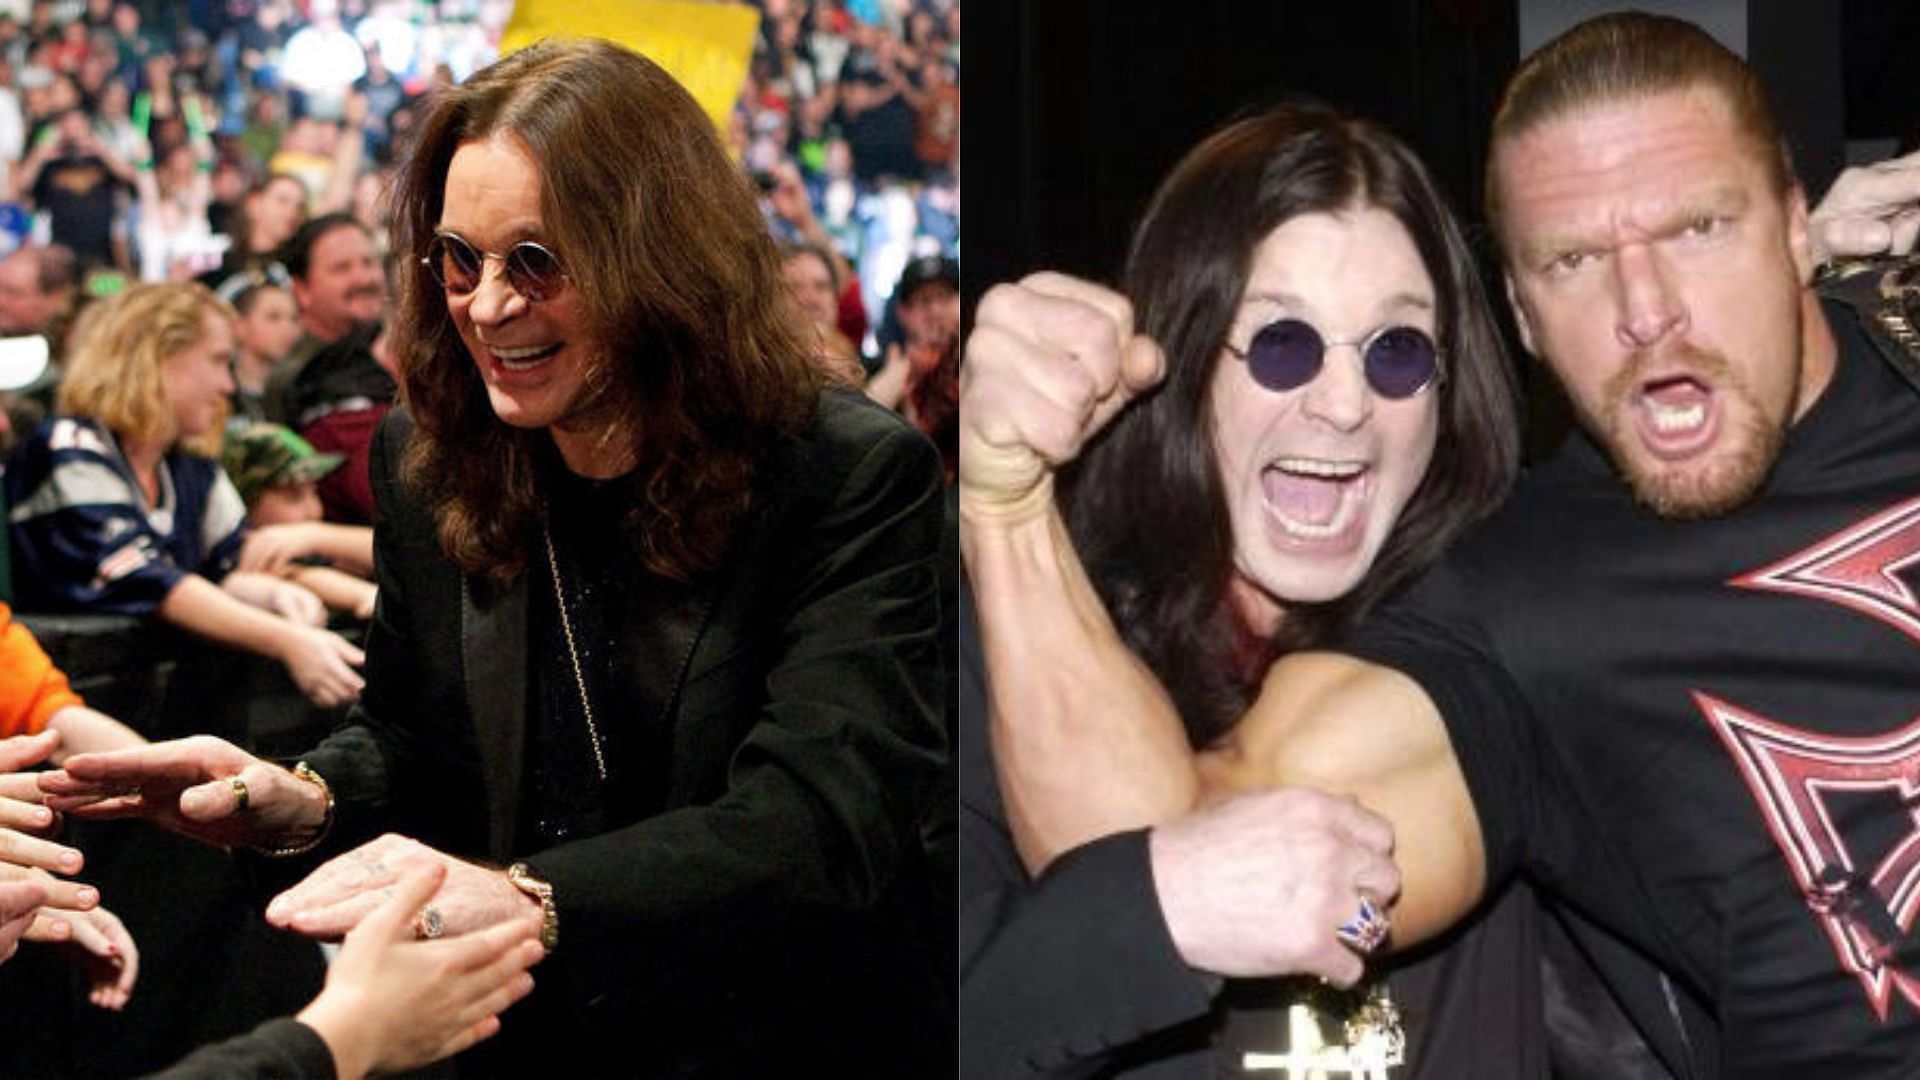 Black Sabbath vocalist Ozzy Osbourne